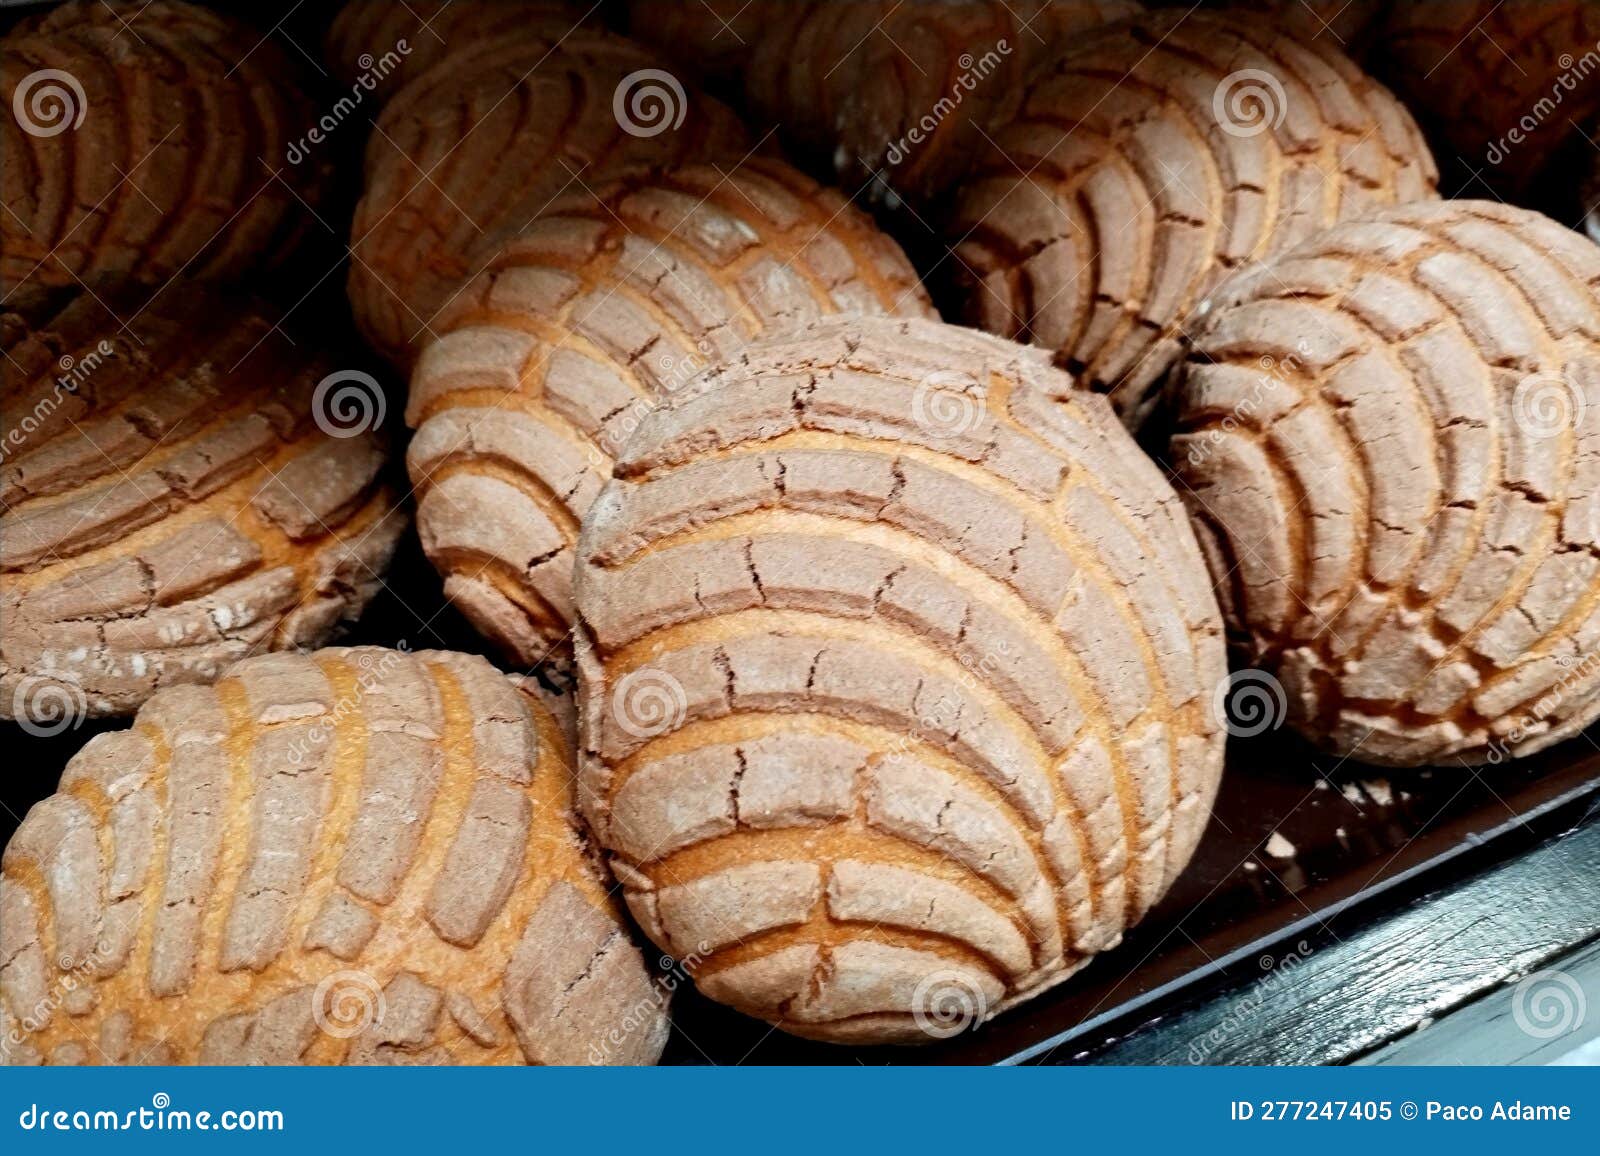 concha pan dulce mÃ©xico sweet bread of mexico